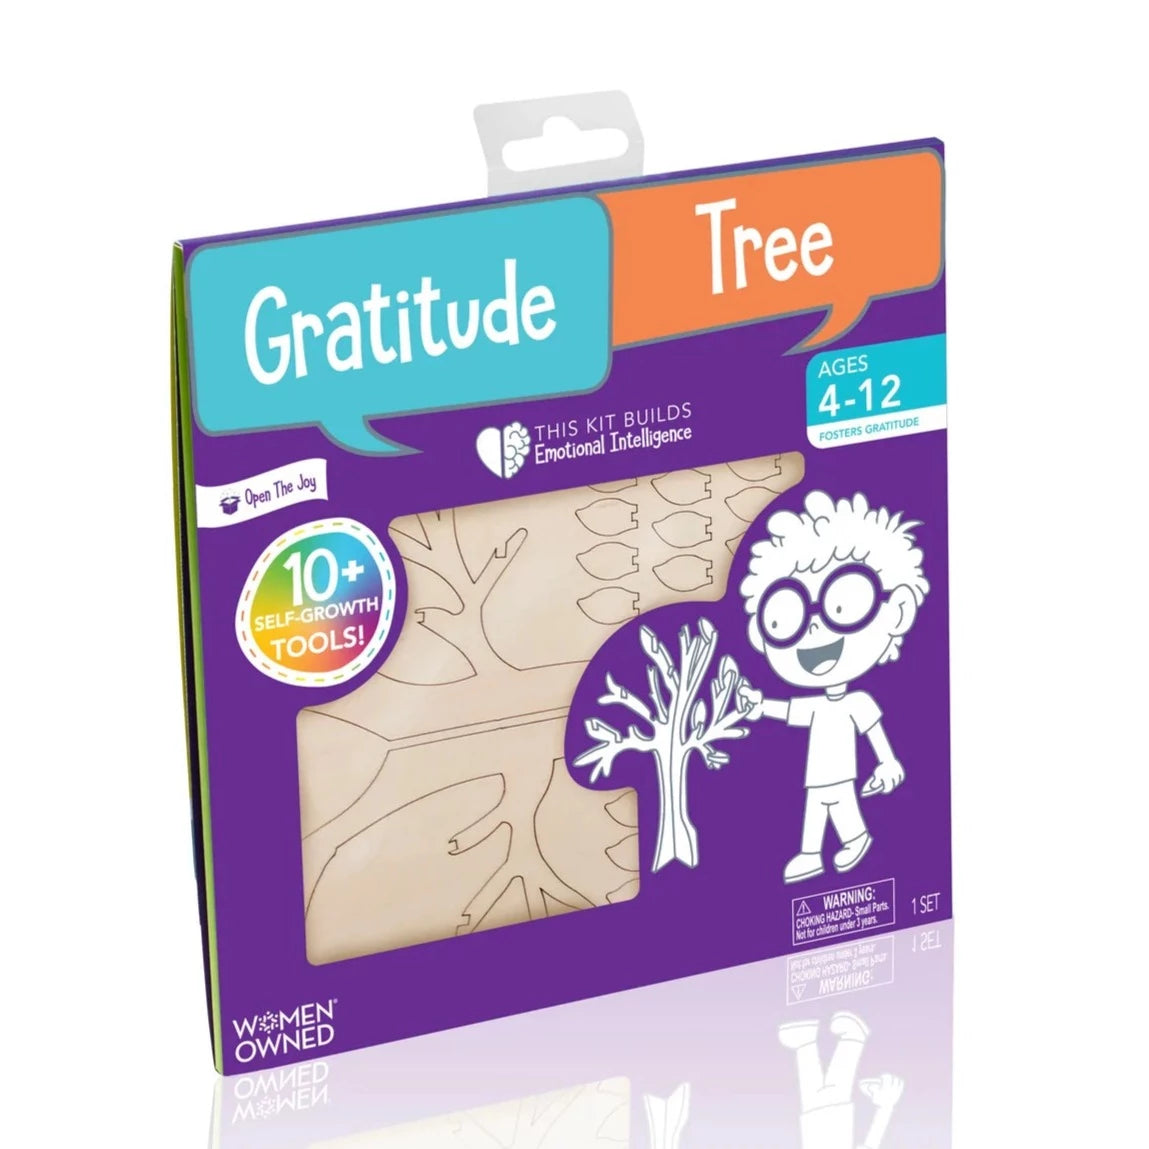 Gratitude Tree